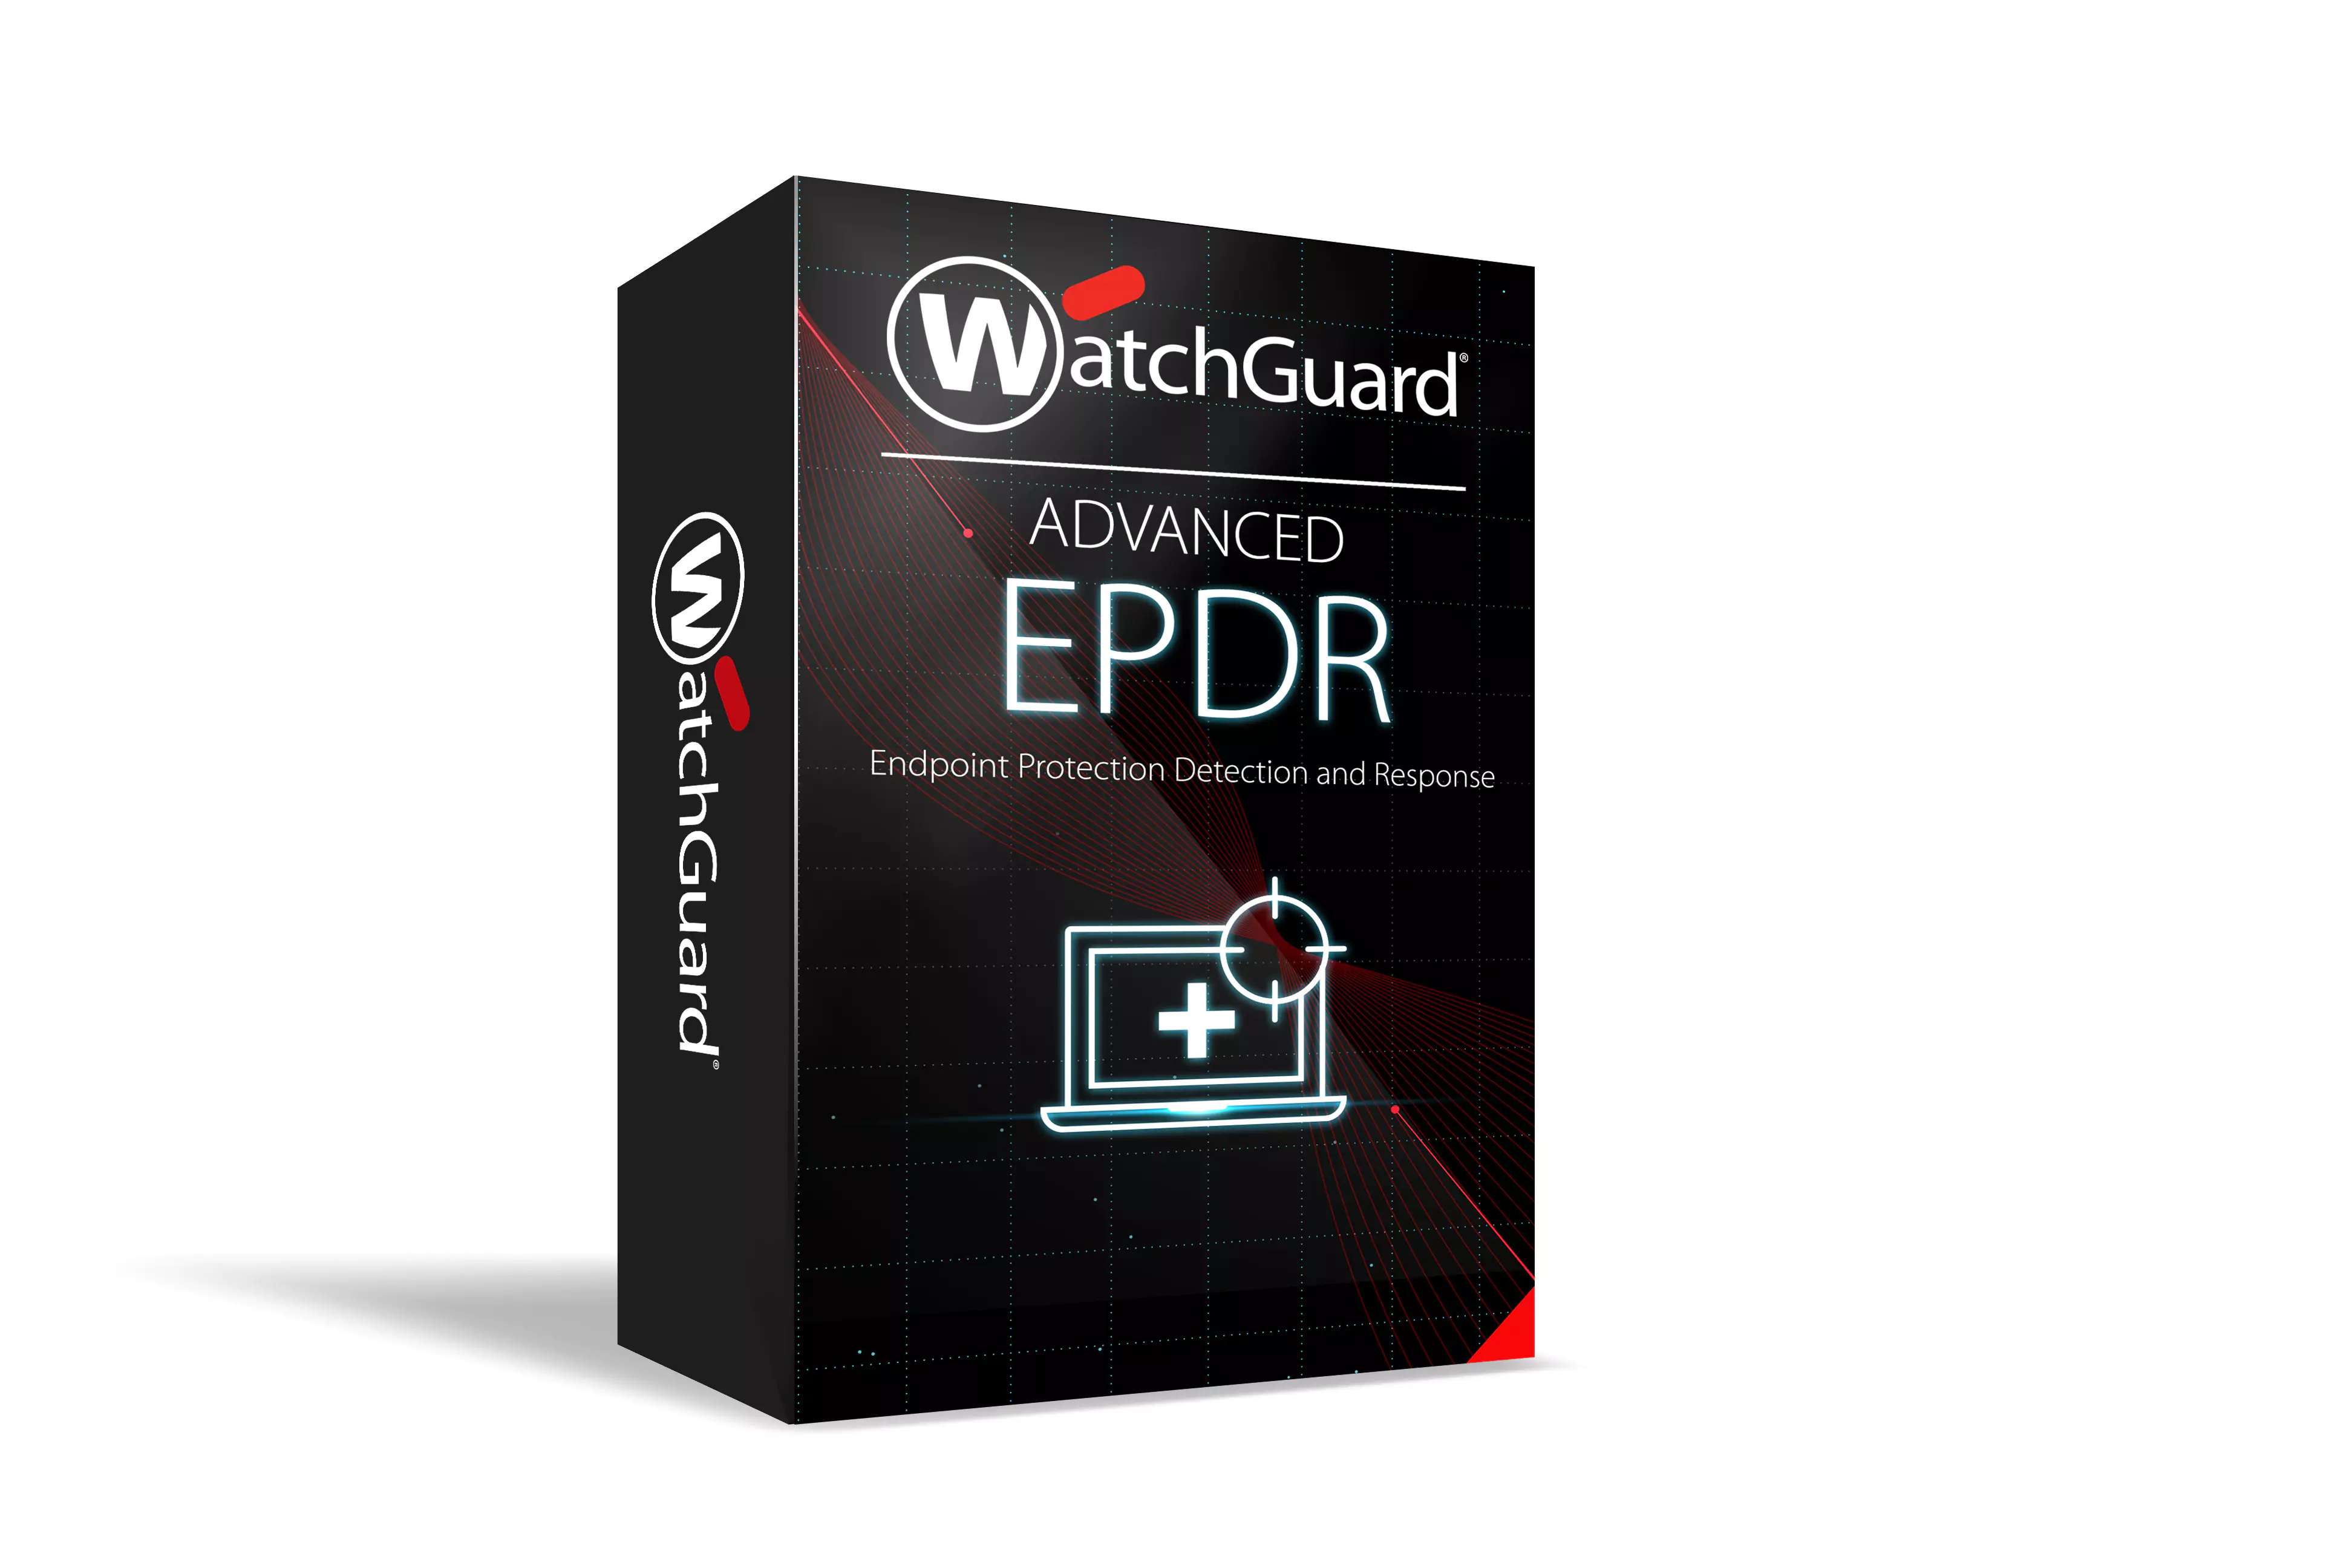 WatchGuard Advanced EPDR